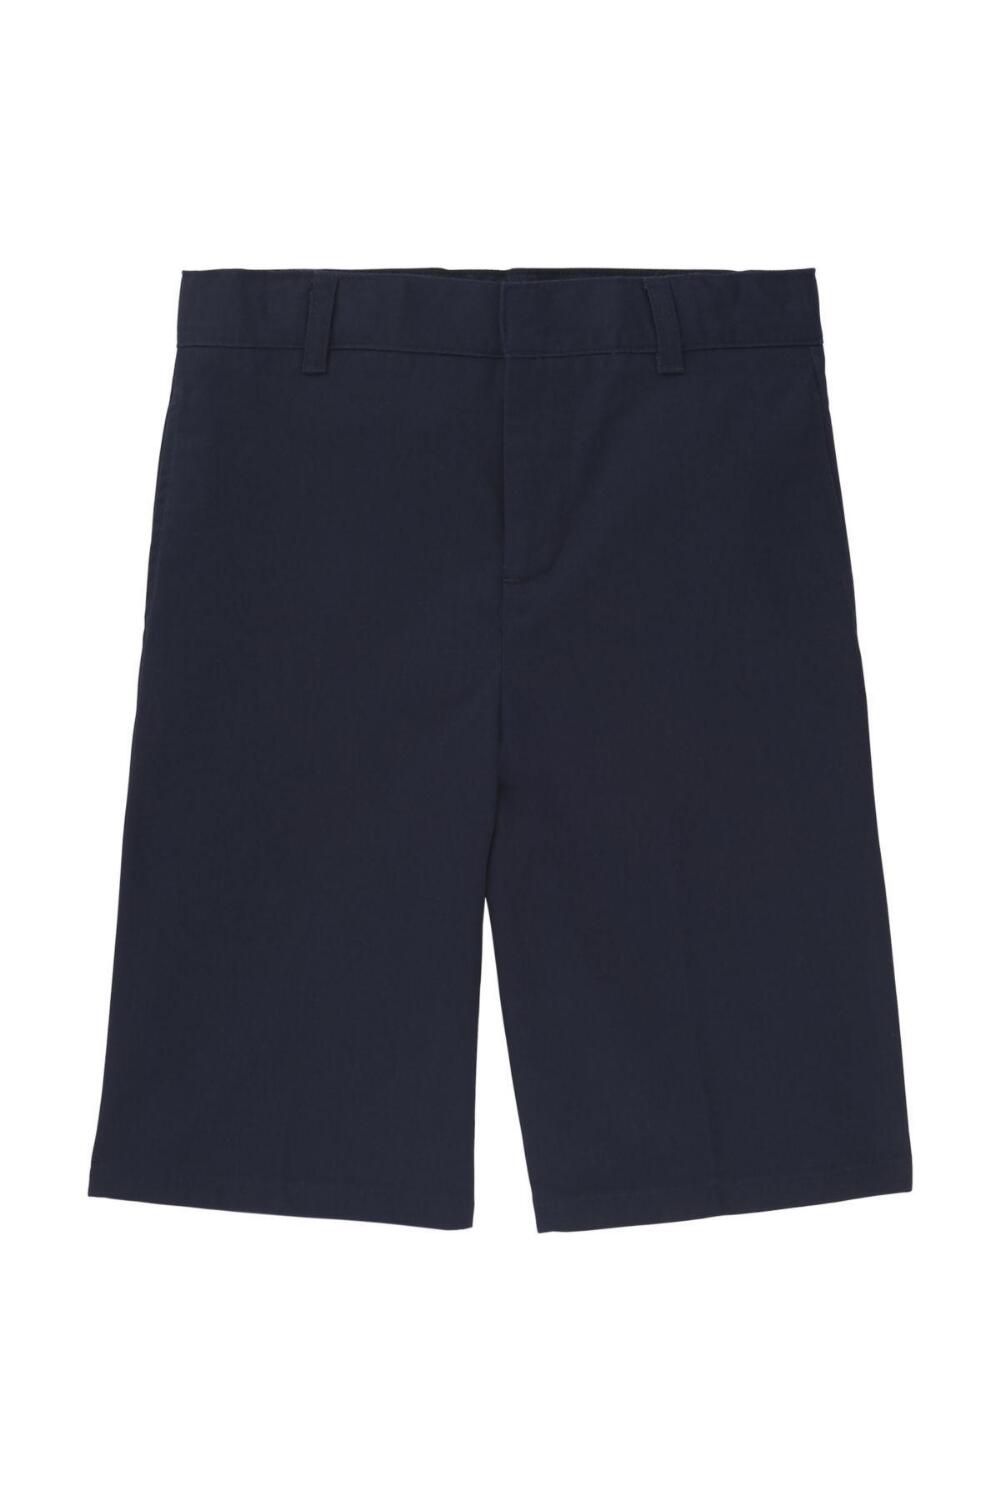 Boys Flat Front Adjustable Waist Uniform Shorts (Boy's Short Color: Navy - YLS, Boy's Short Size: Size 4)